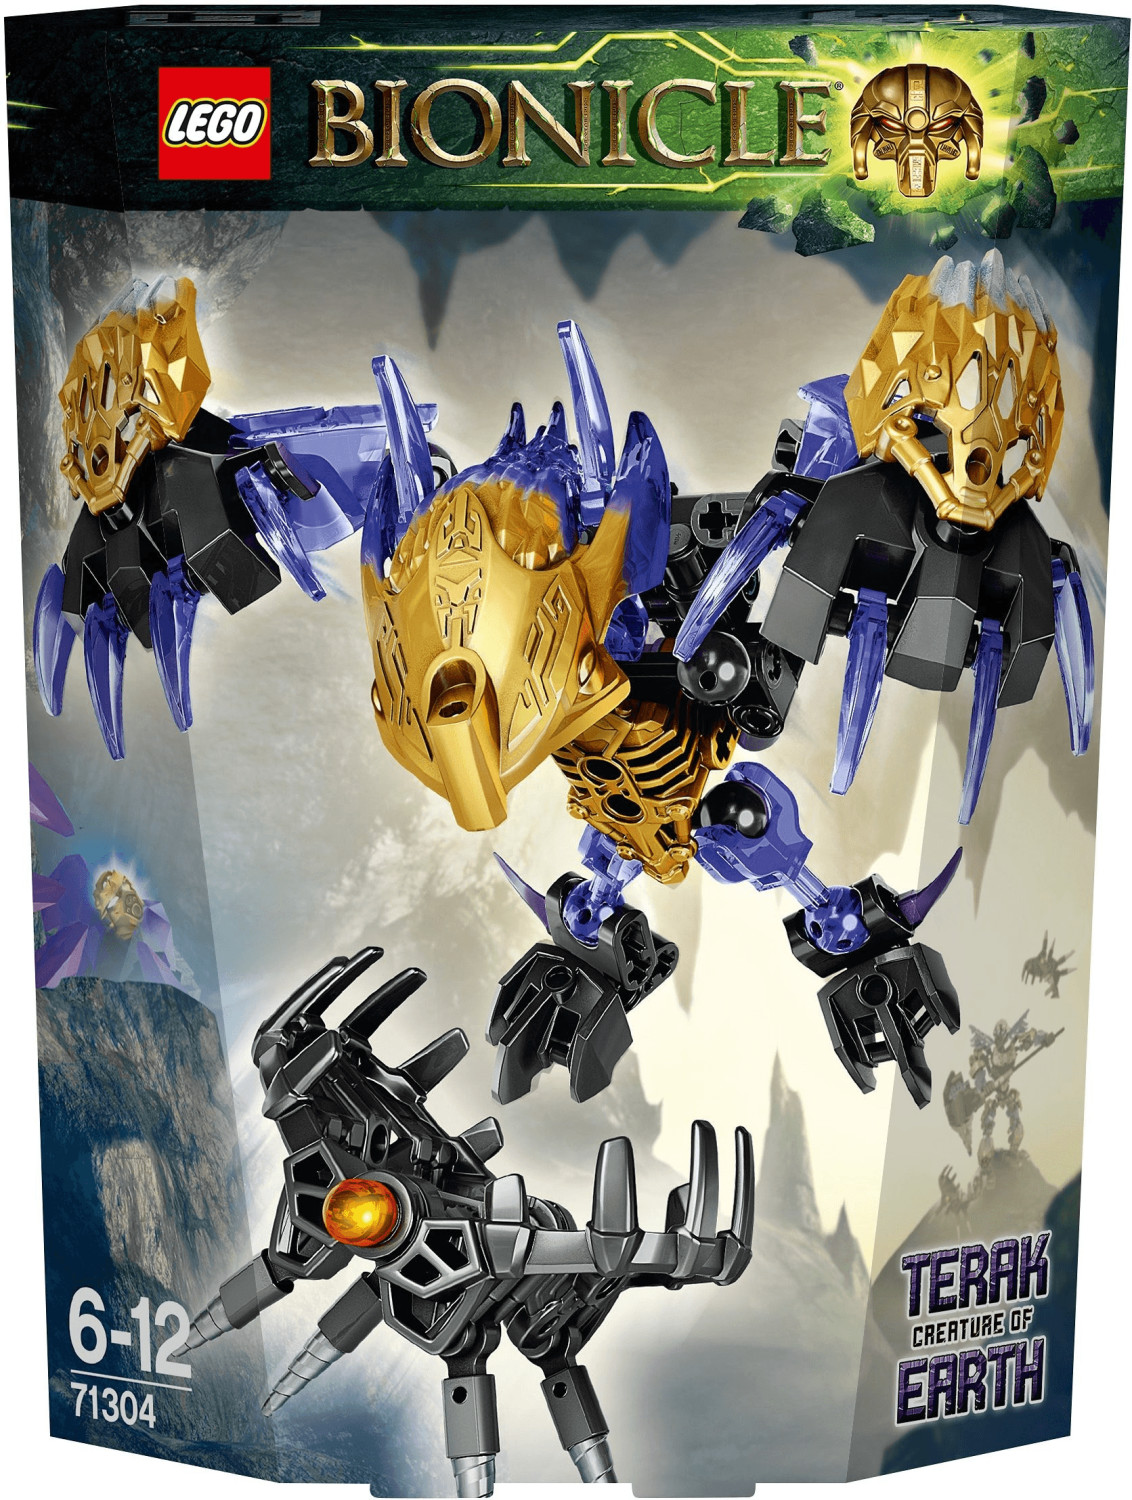 LEGO Bionicle - Terak - Creature of Earth (71304)